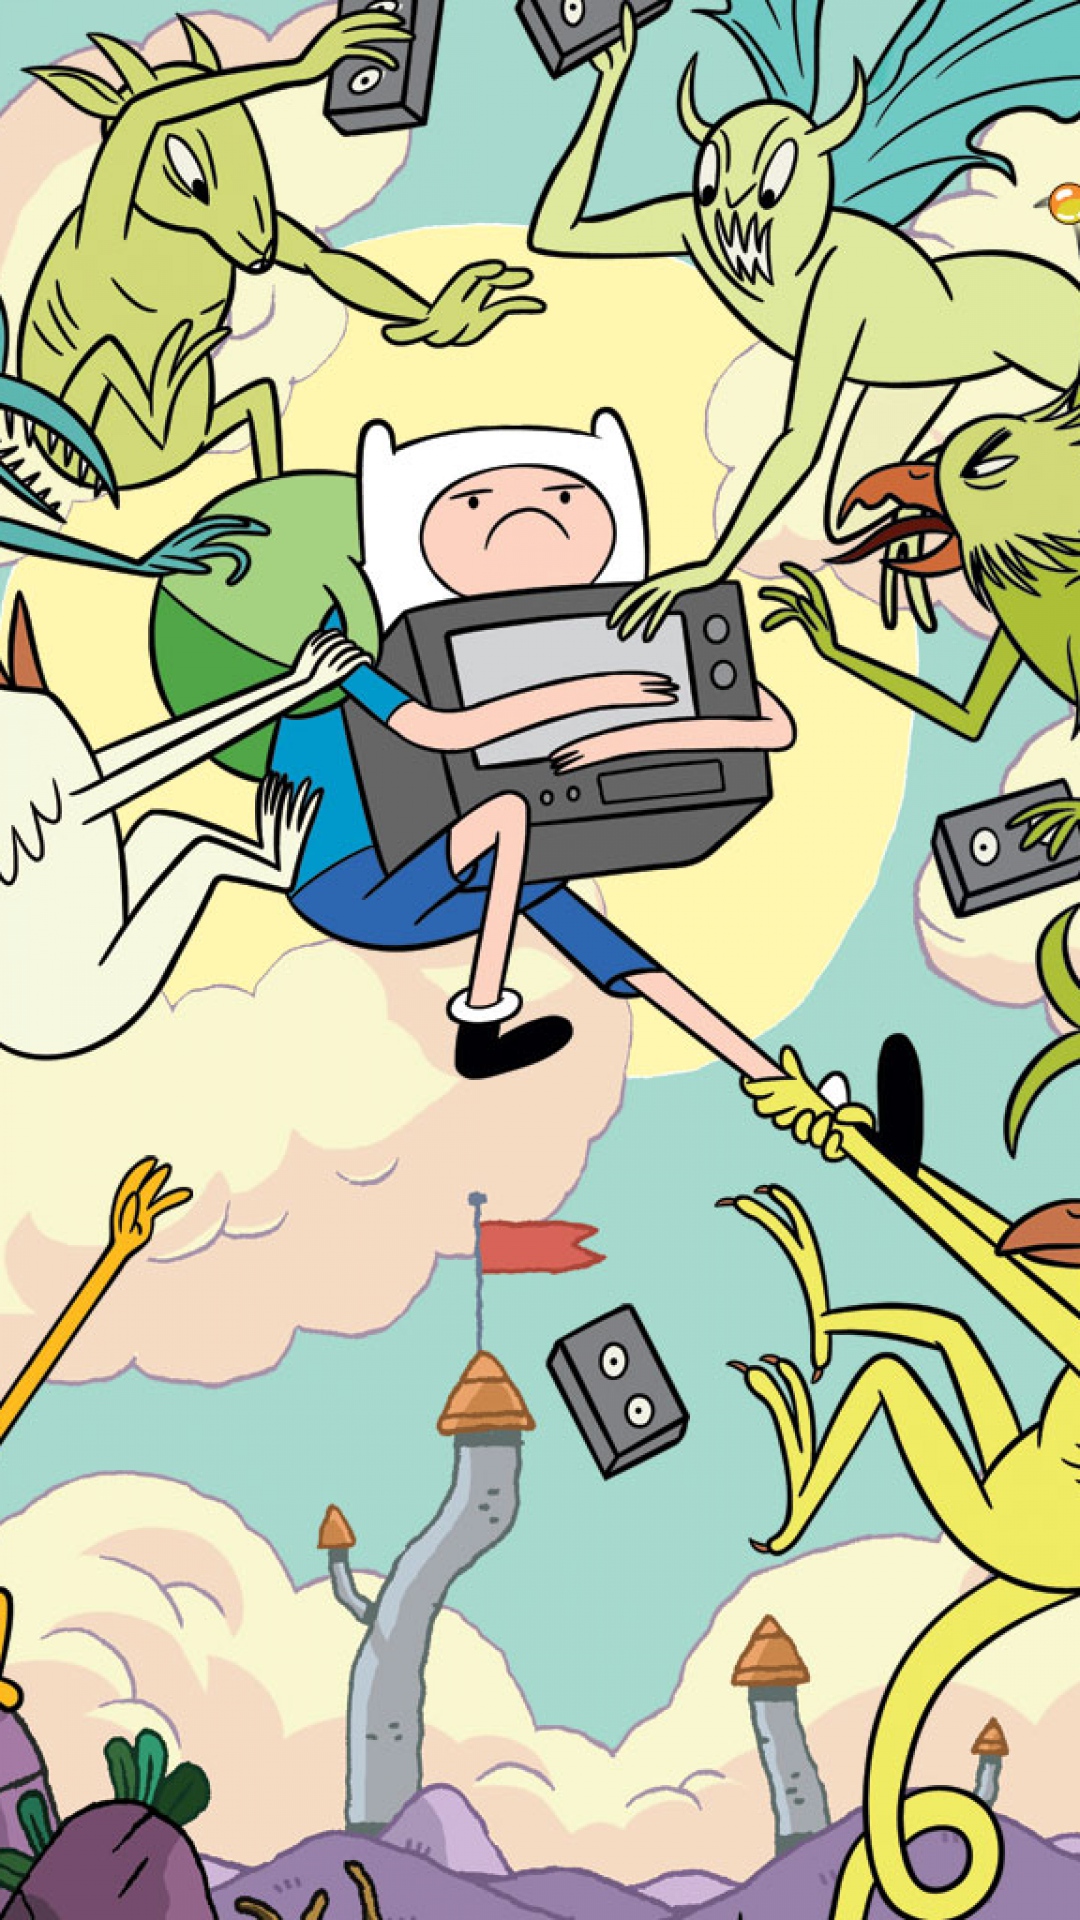 Phone Wallpaper HD on Twitter Adventure Time iPhone X Wallpaper HD  httpstcoWZrOnnx2w4 httpstcoyEKJOQrecx  Twitter